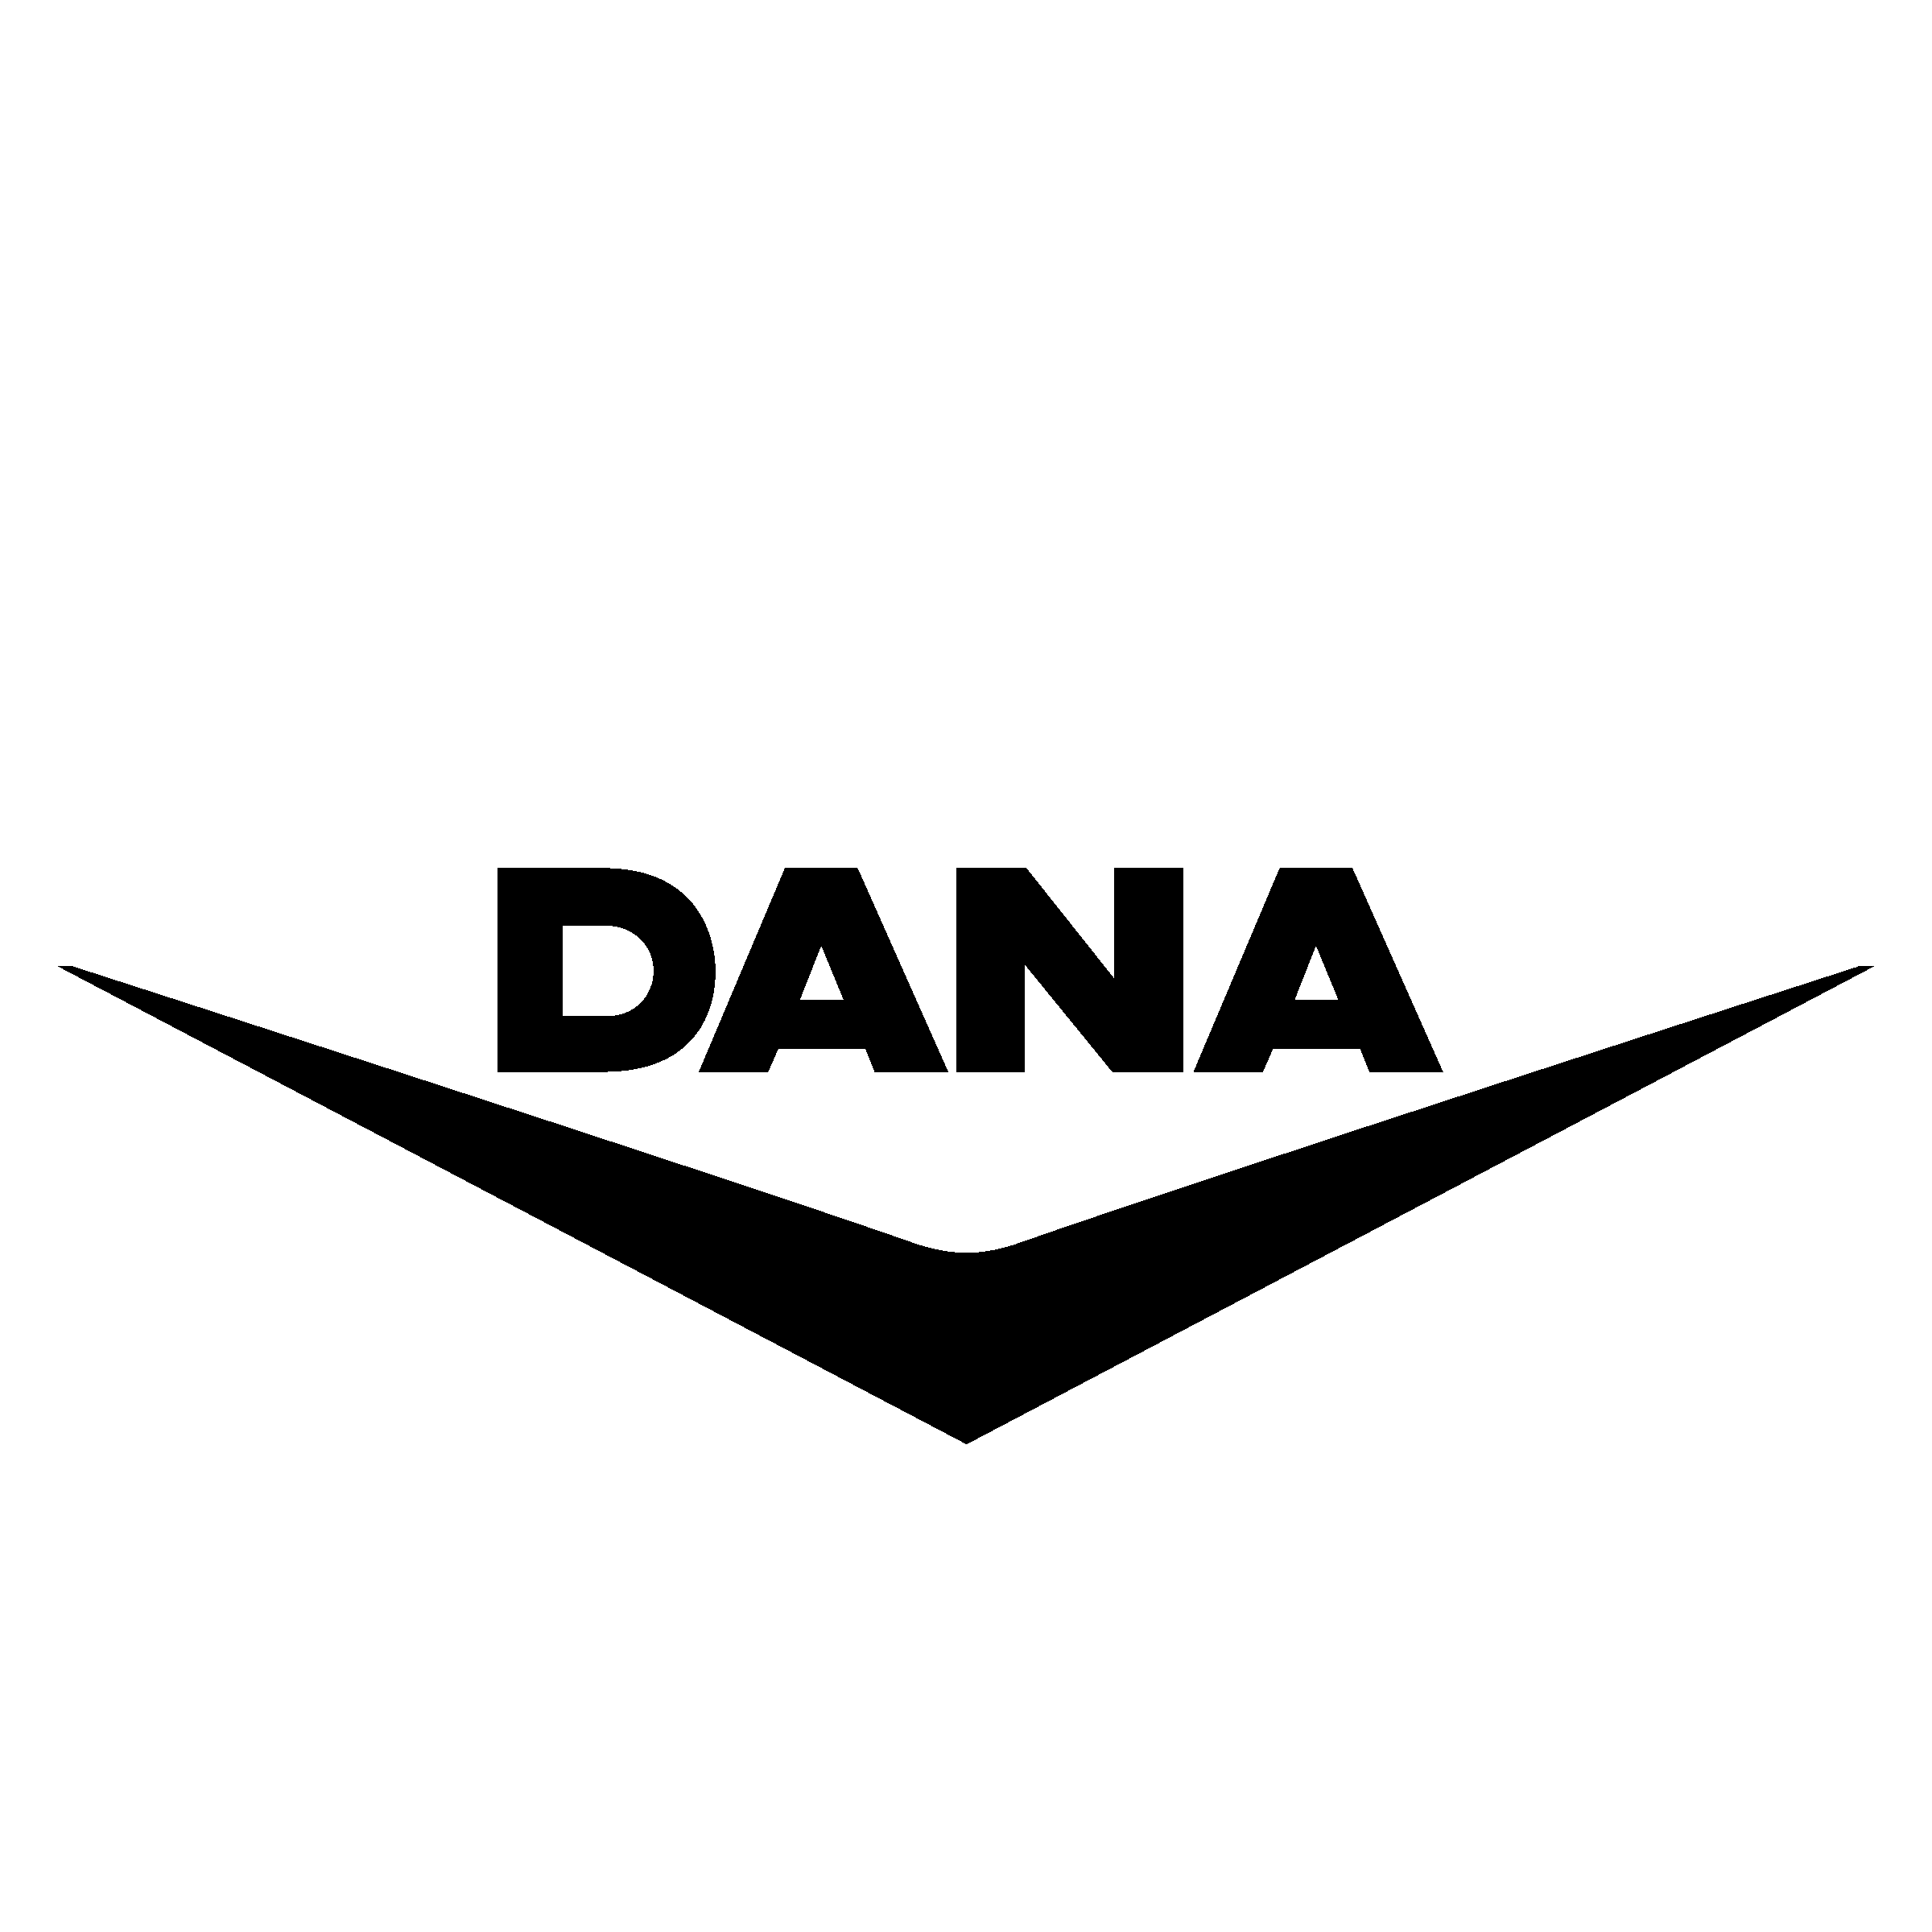 Dana Logo - Dana Logo PNG Transparent & SVG Vector